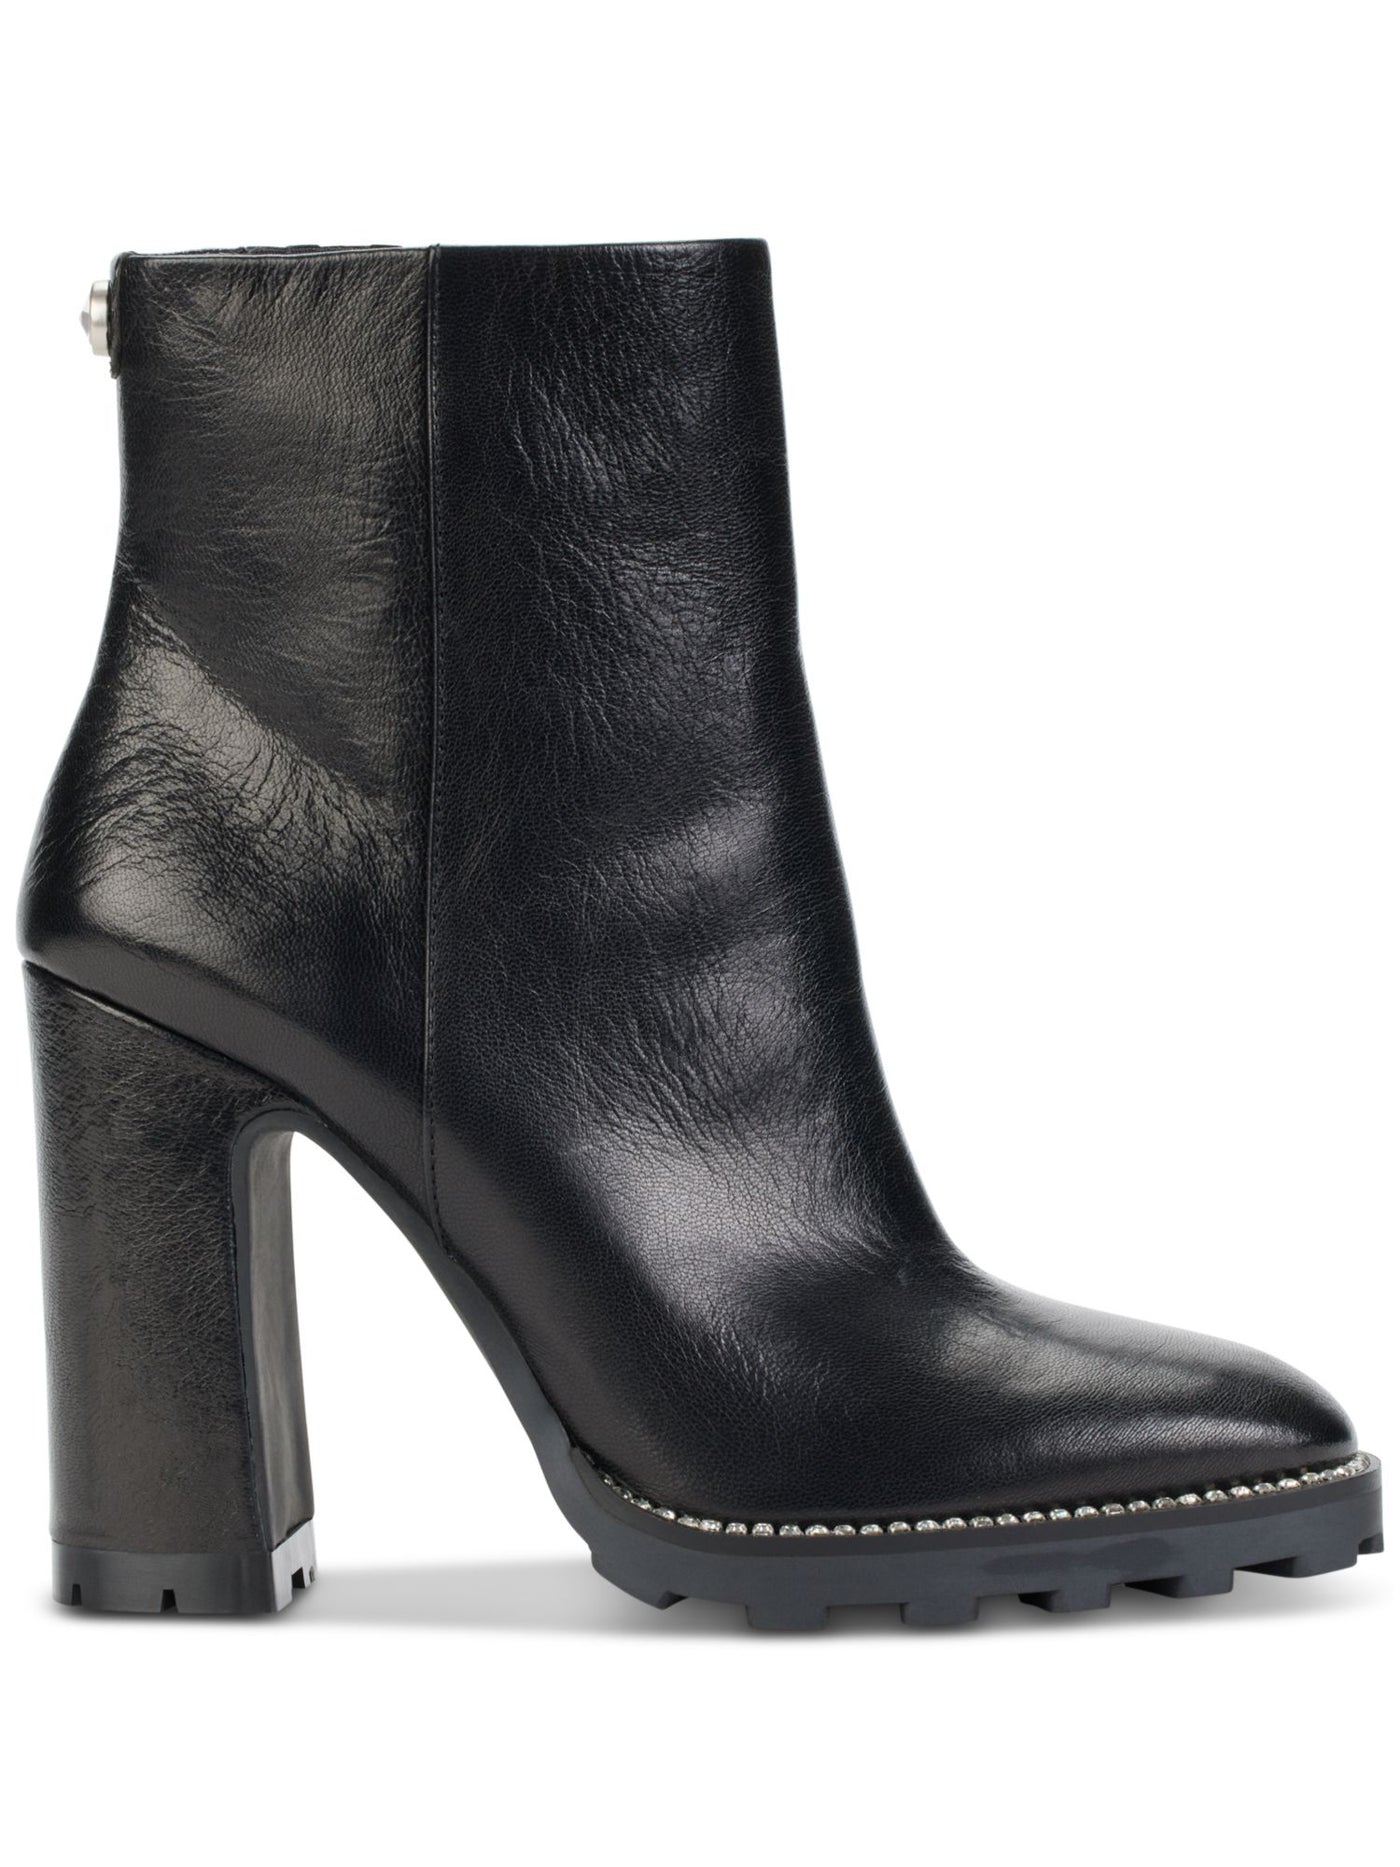 KARL LAGERFELD PARIS Womens Black Comfort Peppy Almond Toe Block Heel Zip-Up Leather Dress Boots 5 M